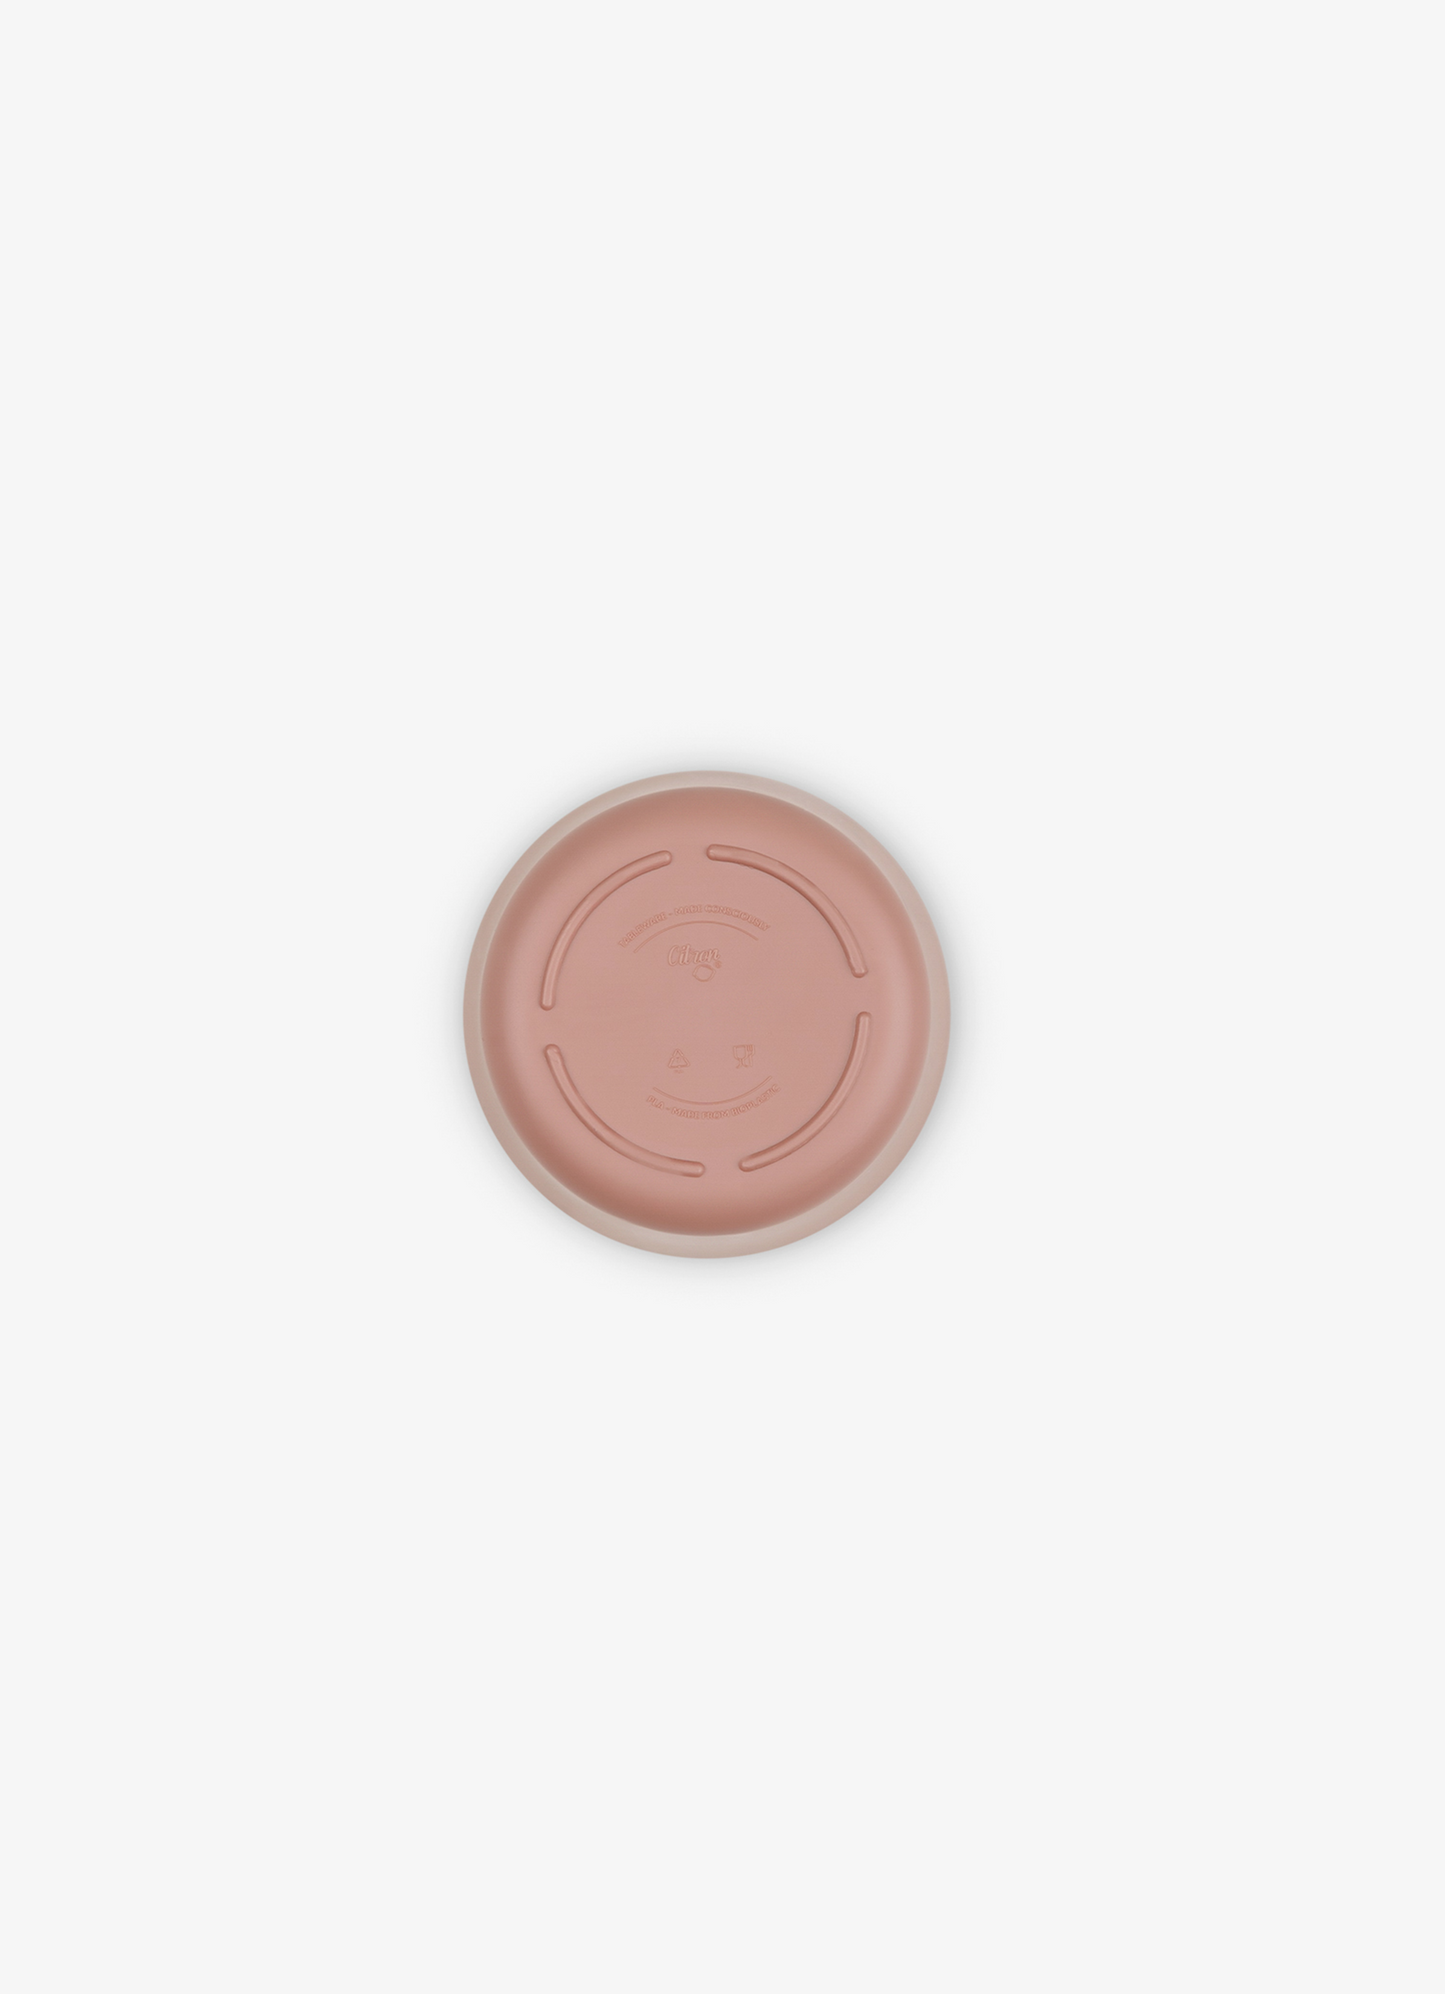 Citron PLA Cup Set of 4 - Pink/Cream - Laadlee